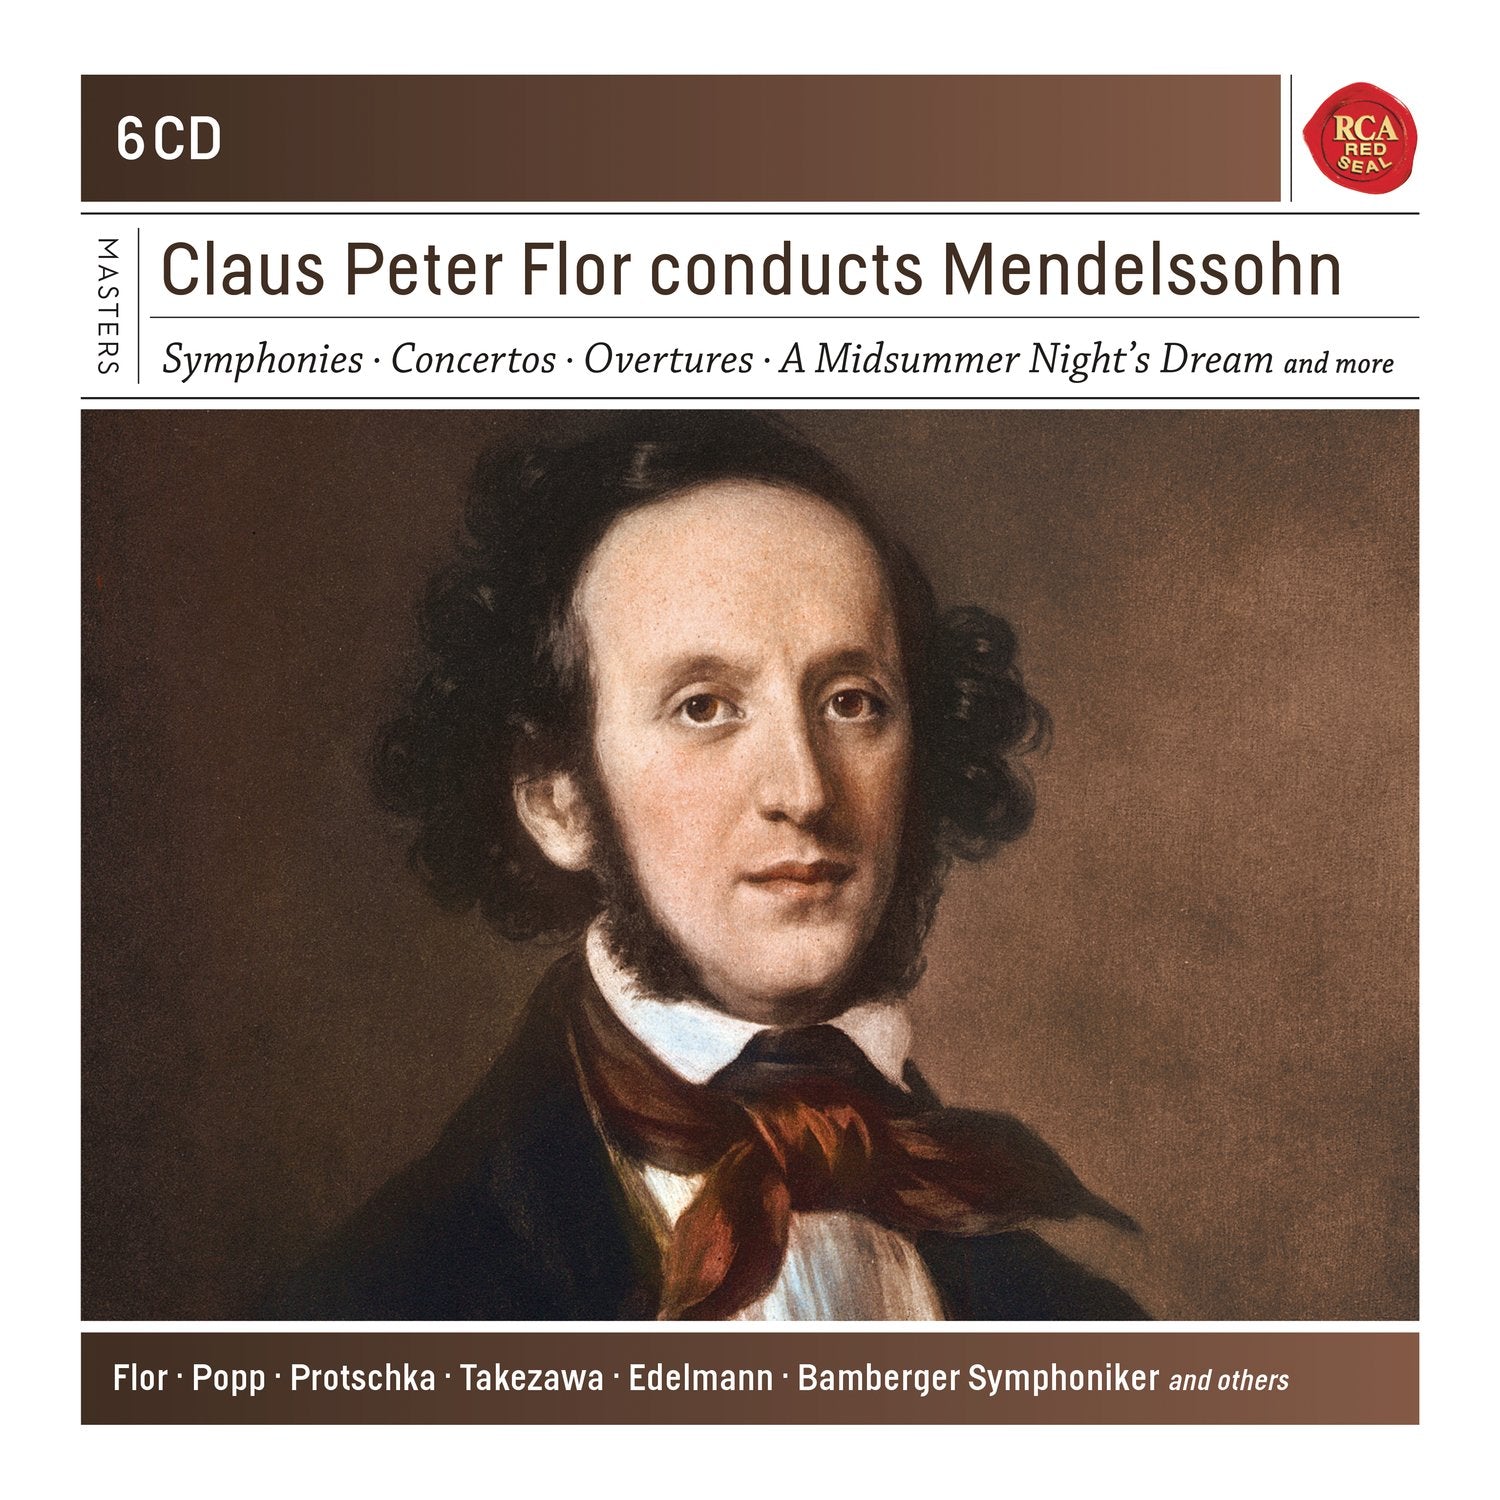 Claus Peter Flor conducts Mendelssohn